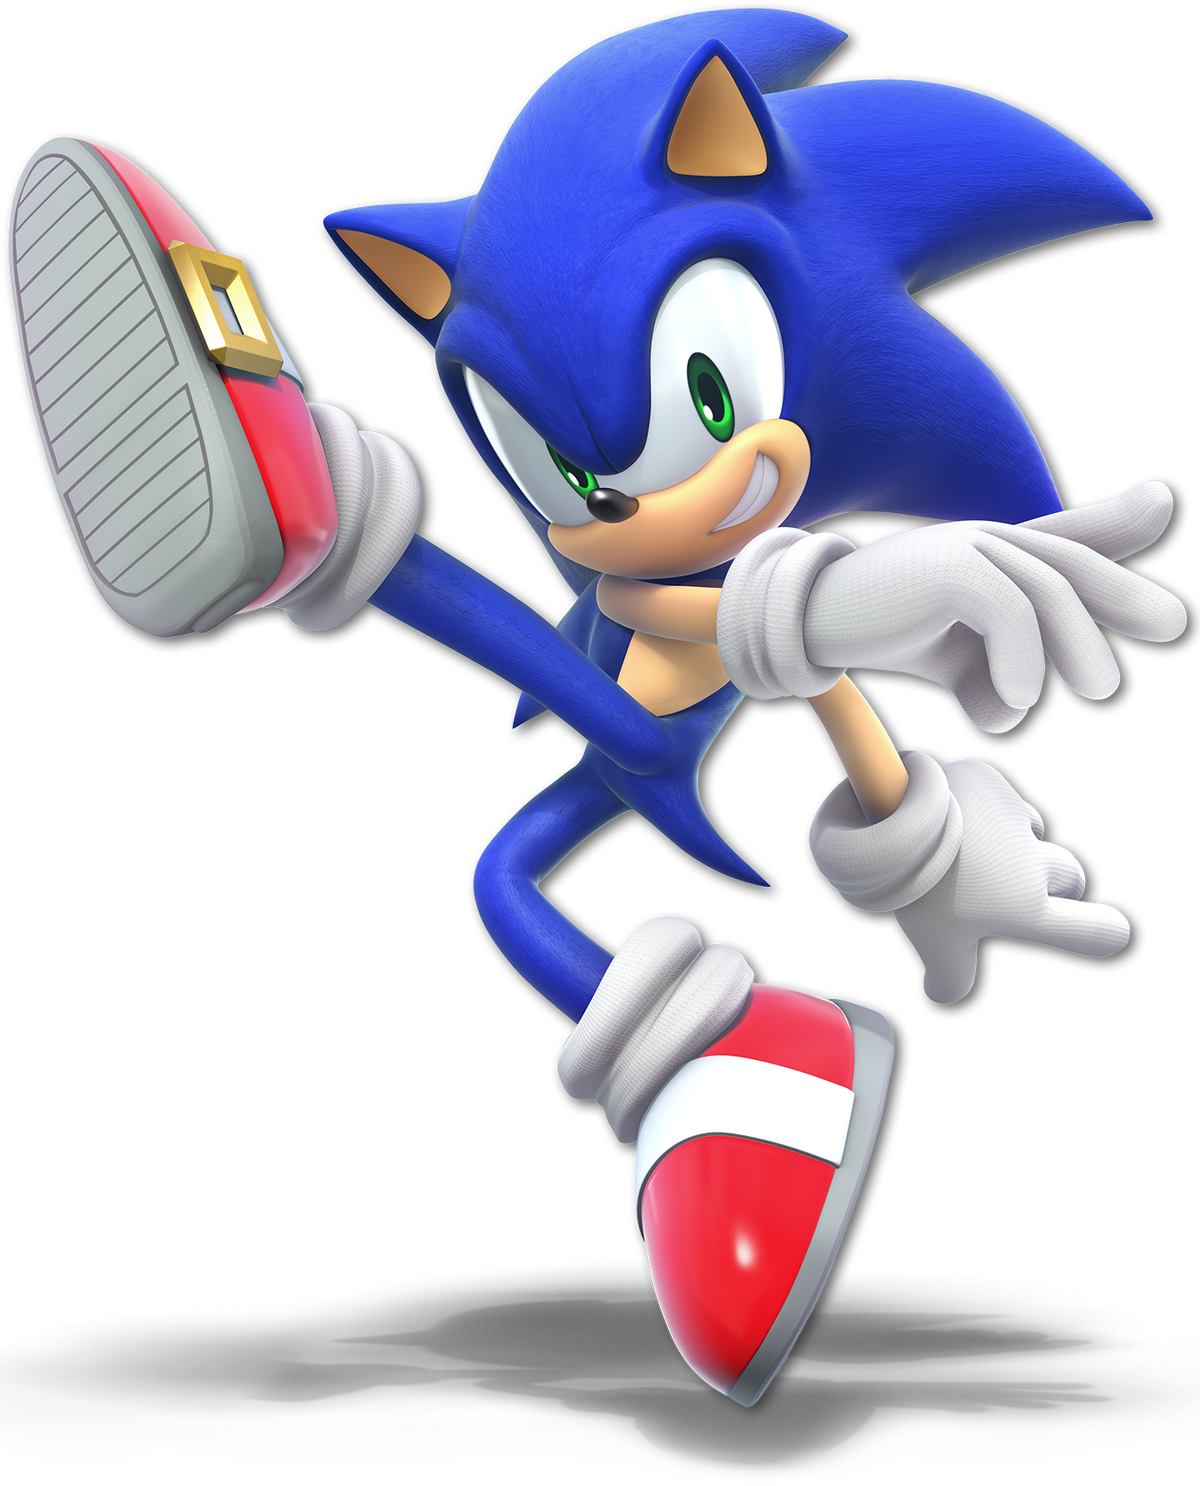 Sonic the Hedgehog (Character) - Giant Bomb